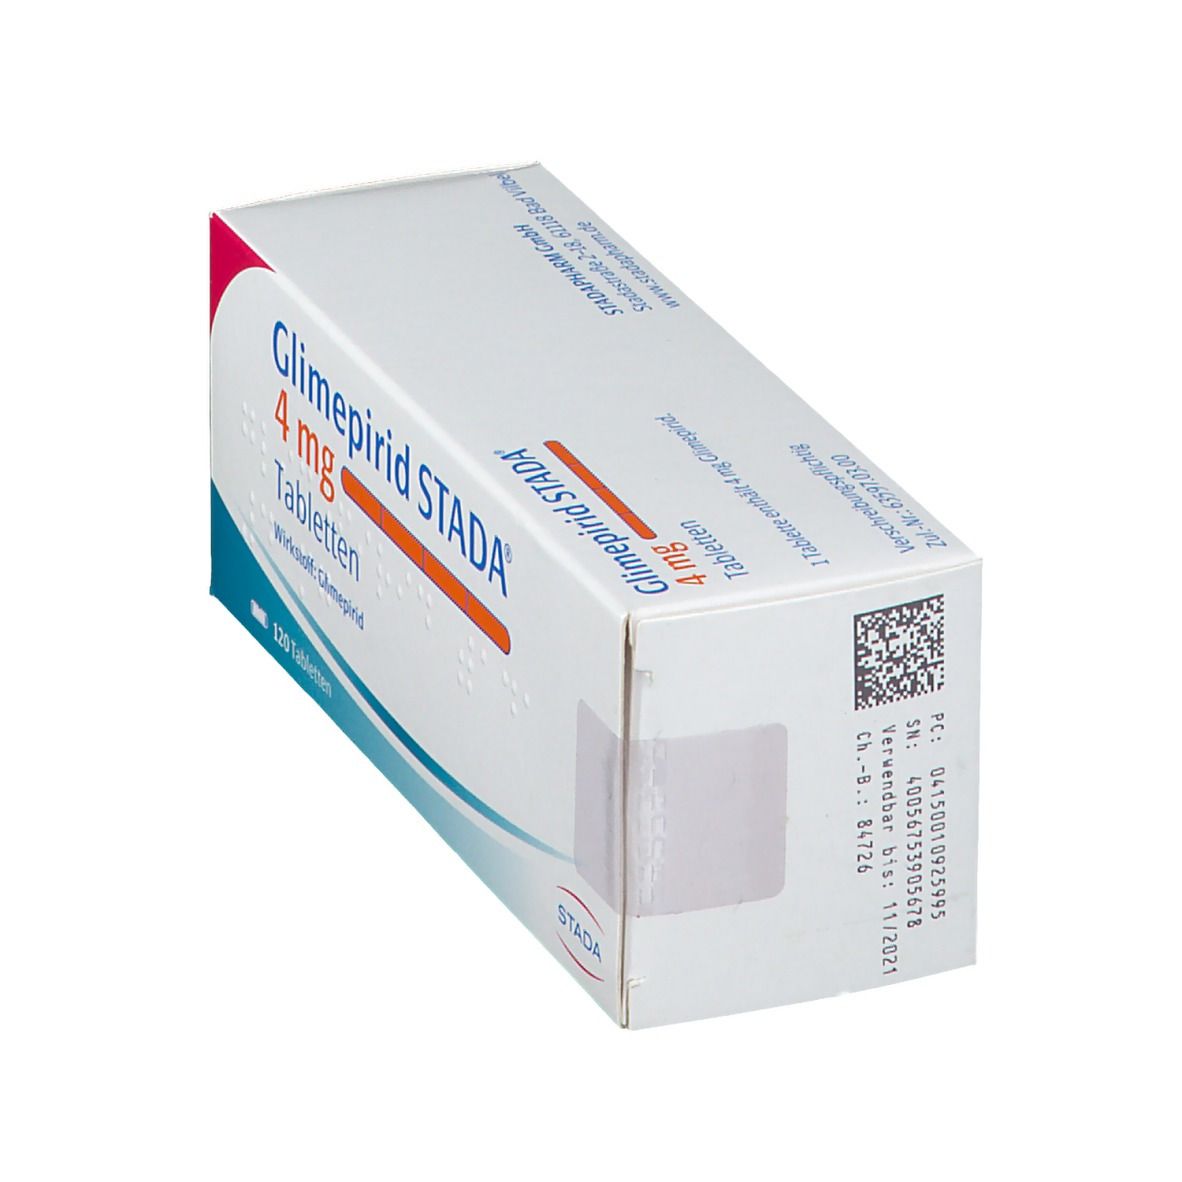 Glimepirid STADA® 4 mg